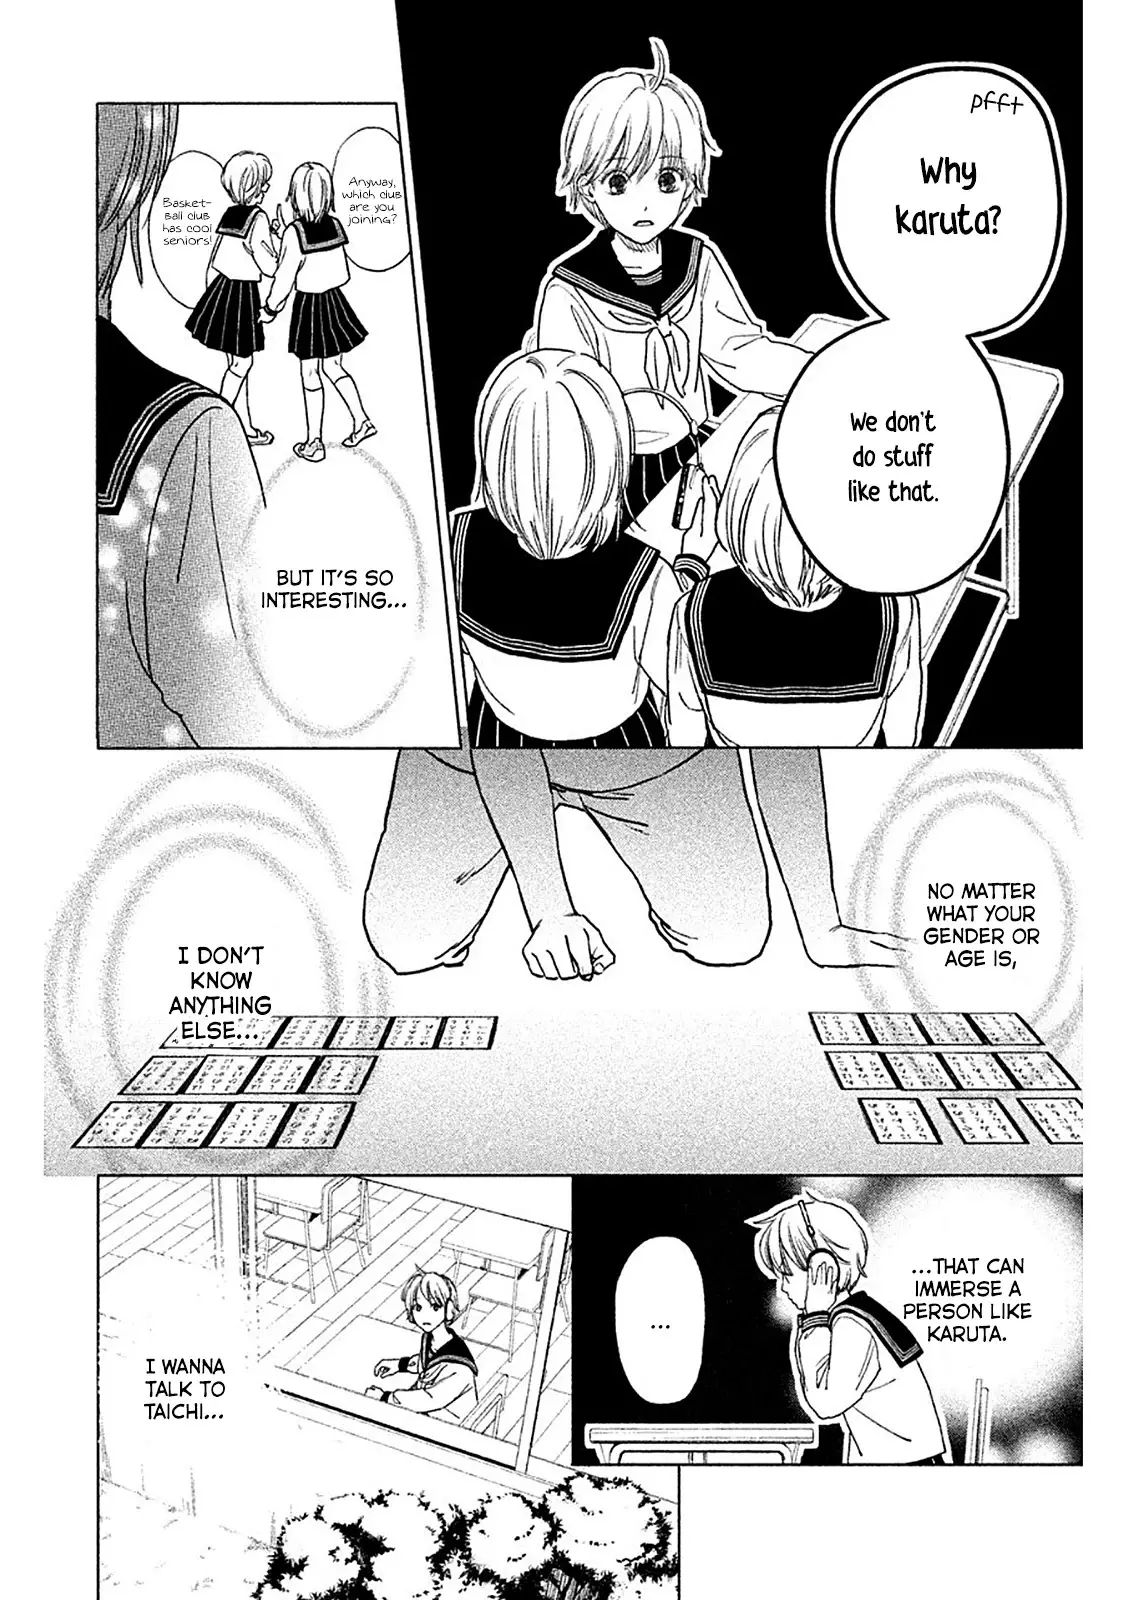 Chihayafuru: Middle School Arc - 1 page 8